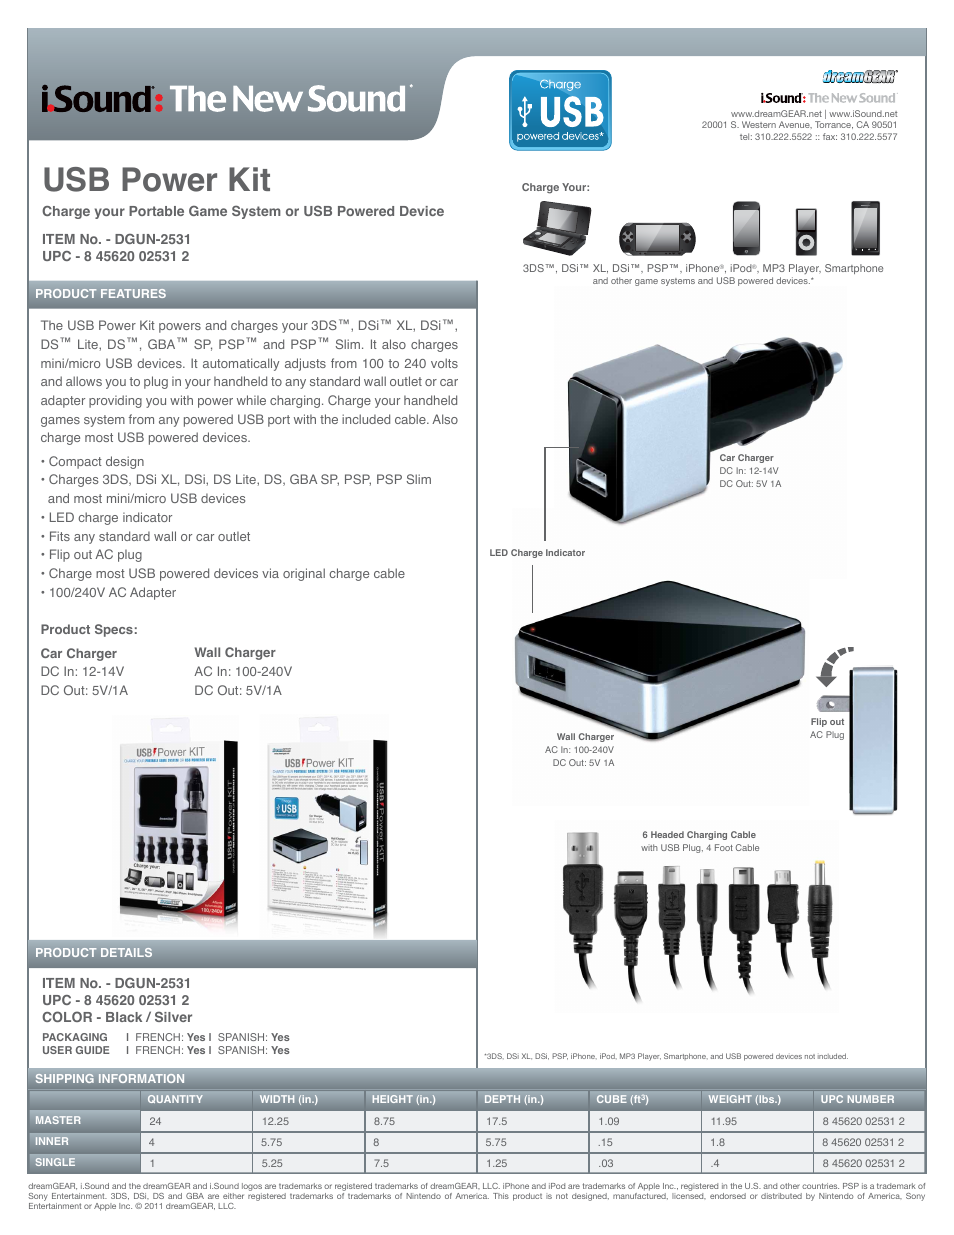 USB Power Kit - Sell Sheet